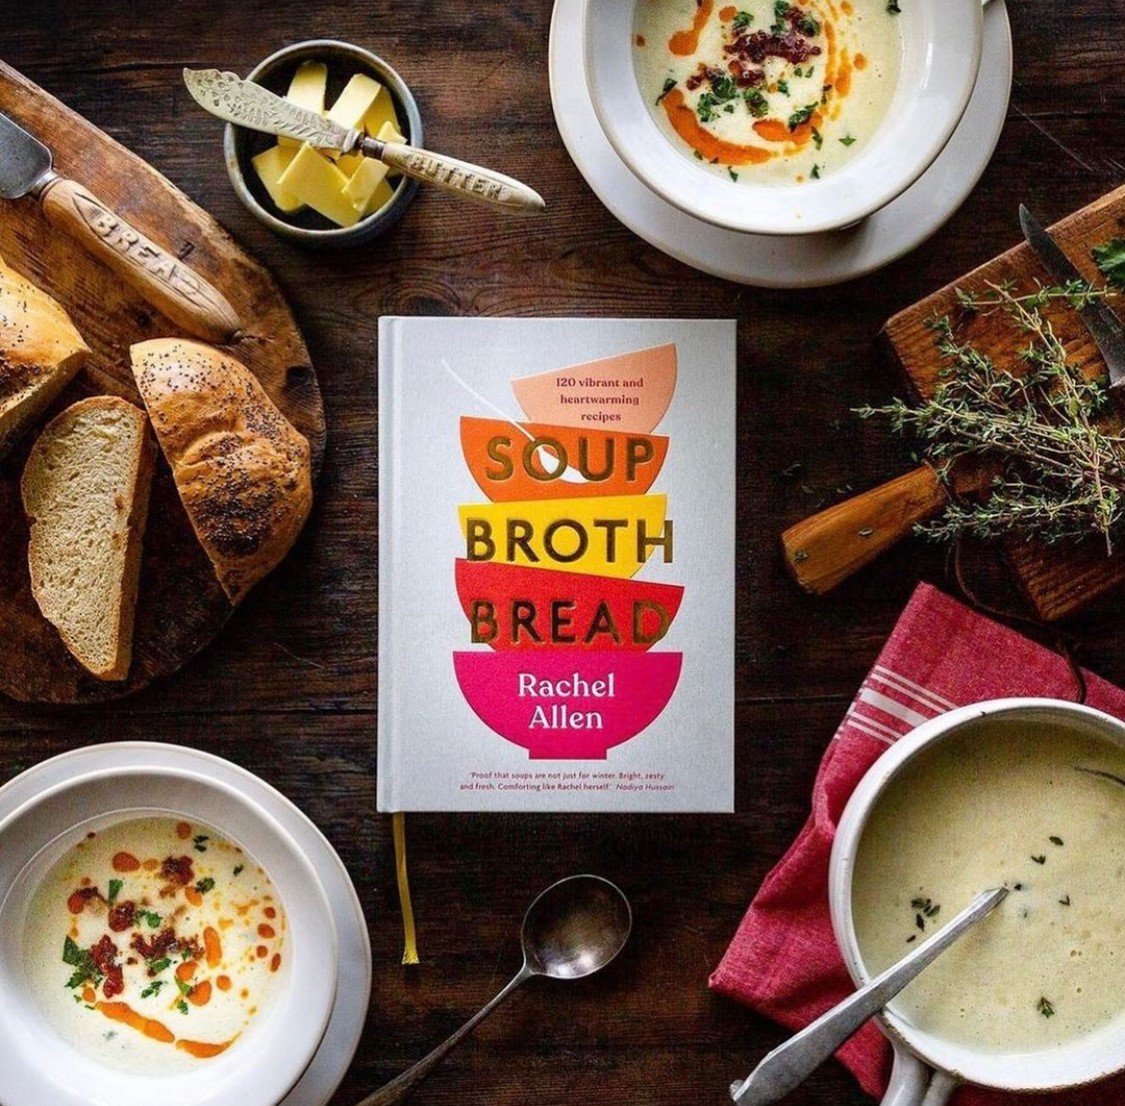 Soup Bread Broth Lifestyle image.jpg